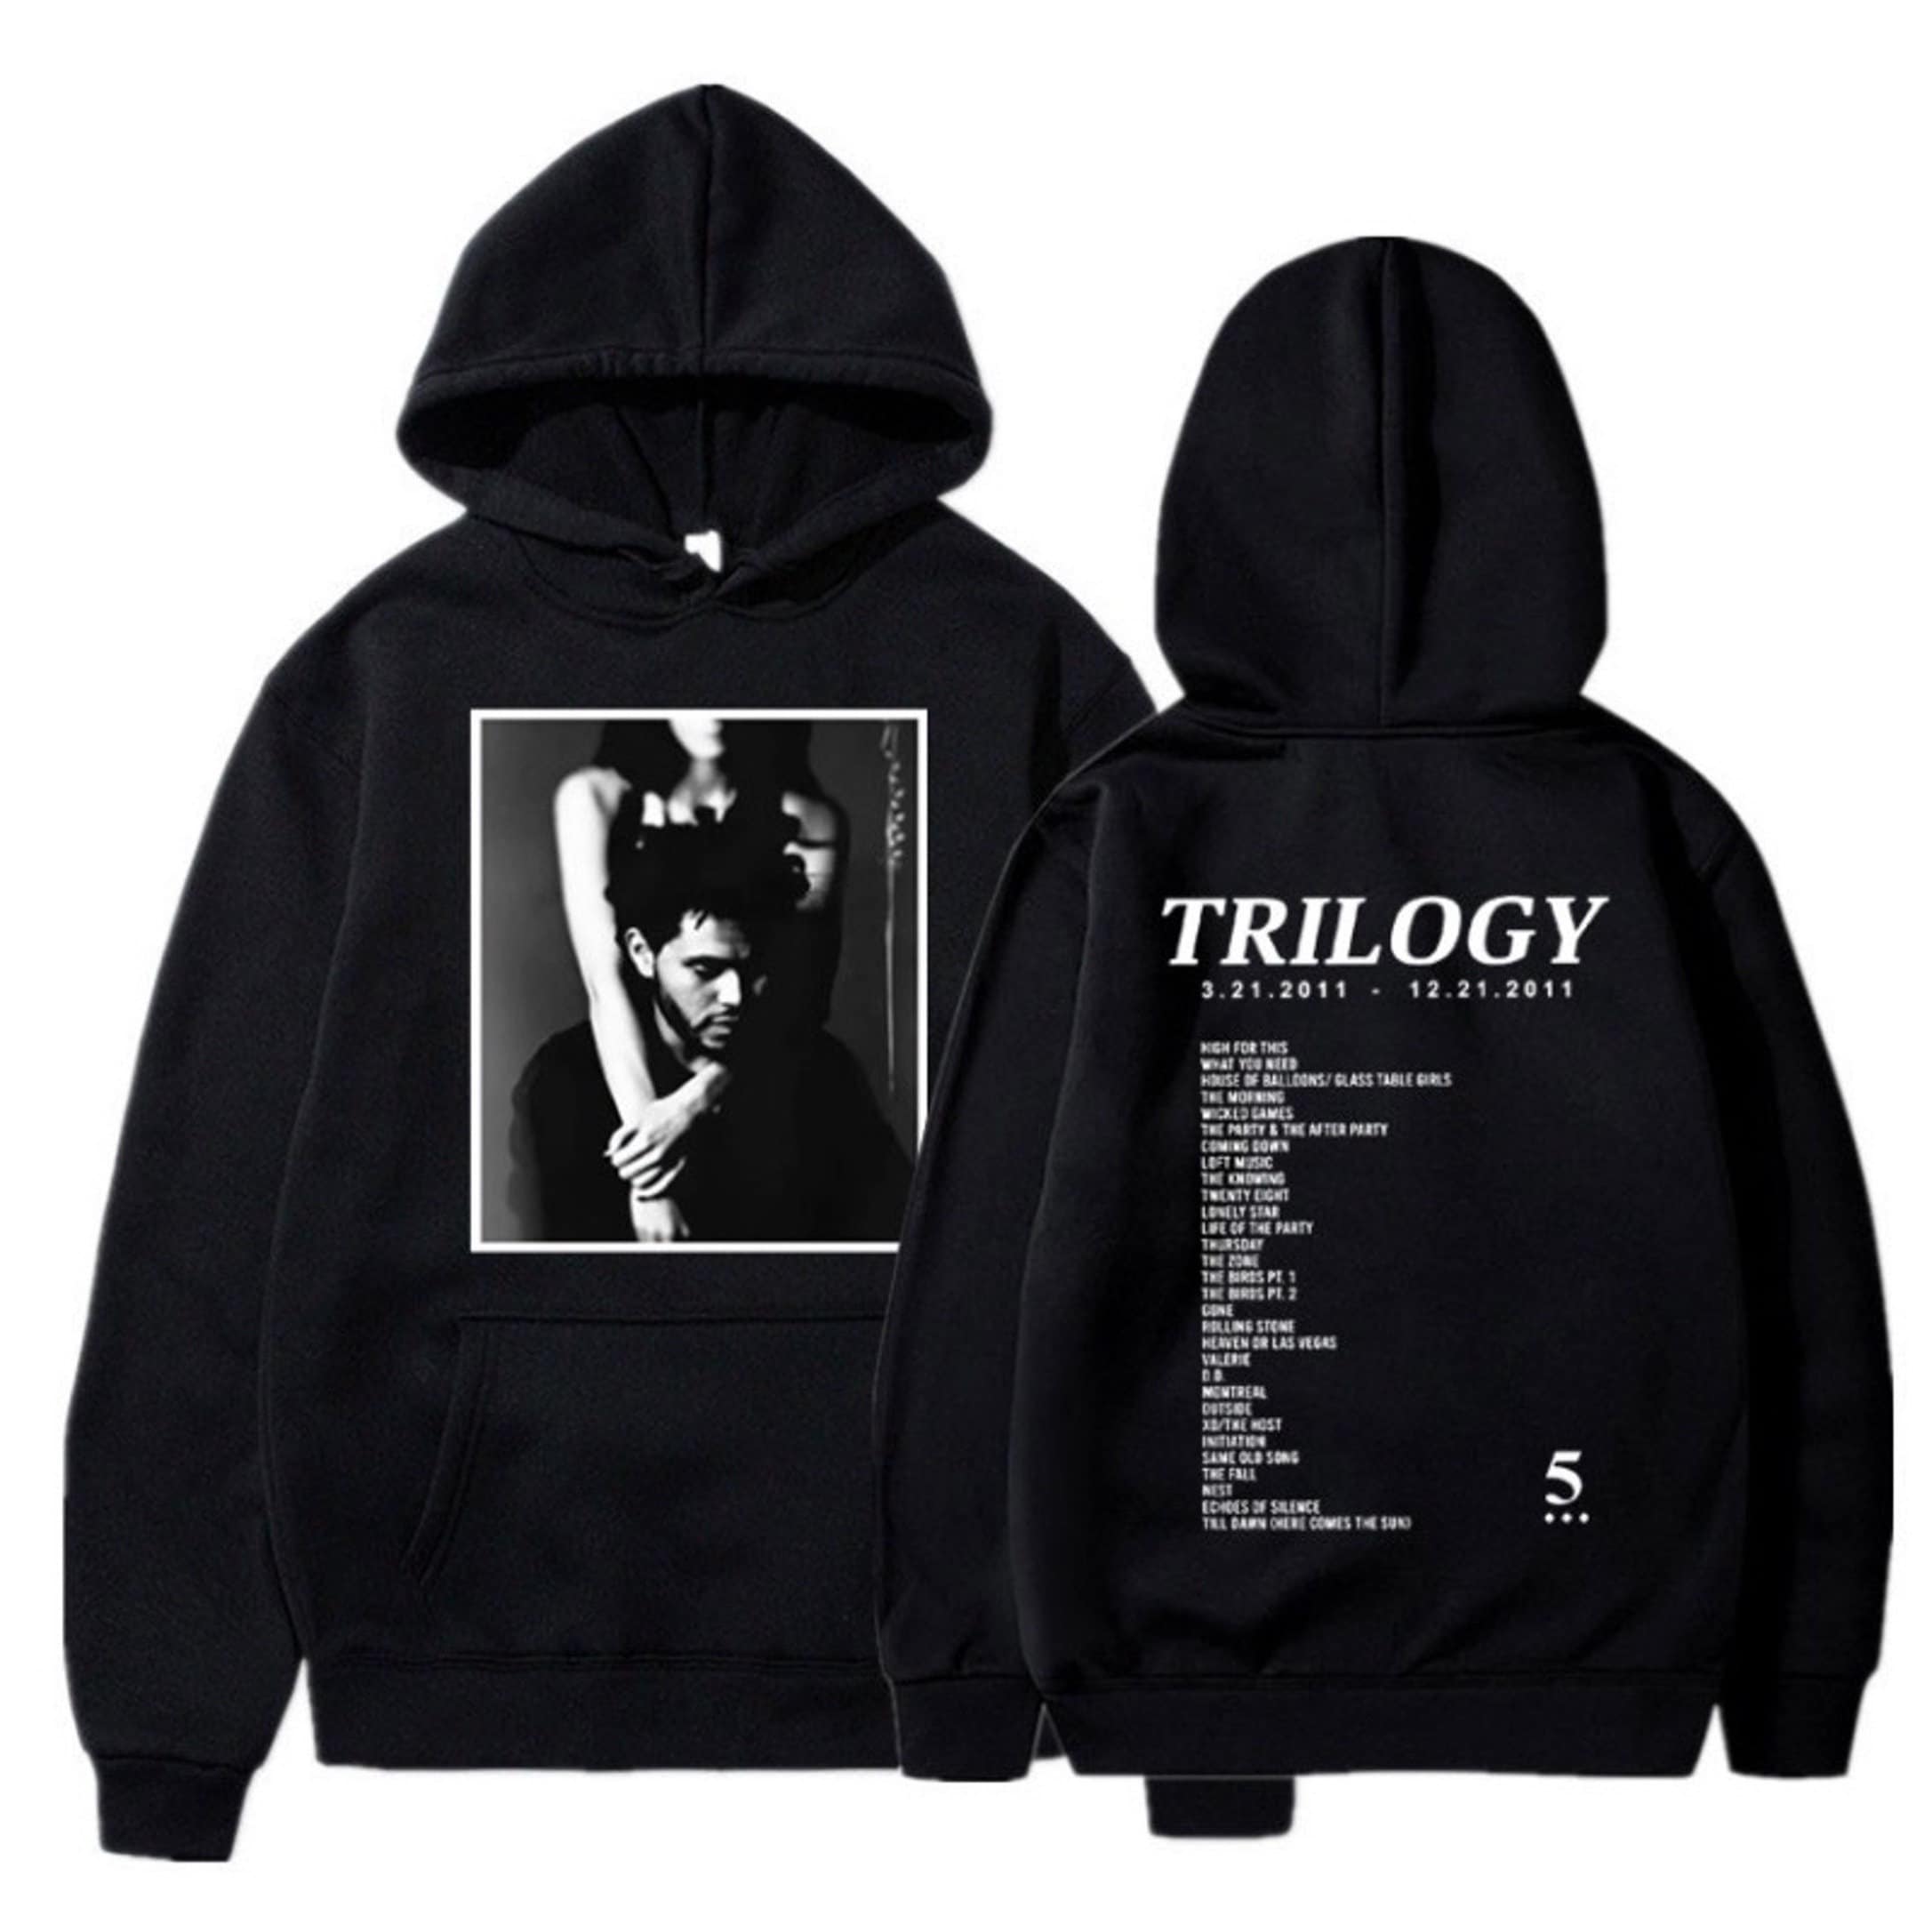 Buy The Weeknd Hoodie Trilogy Online In India -  India